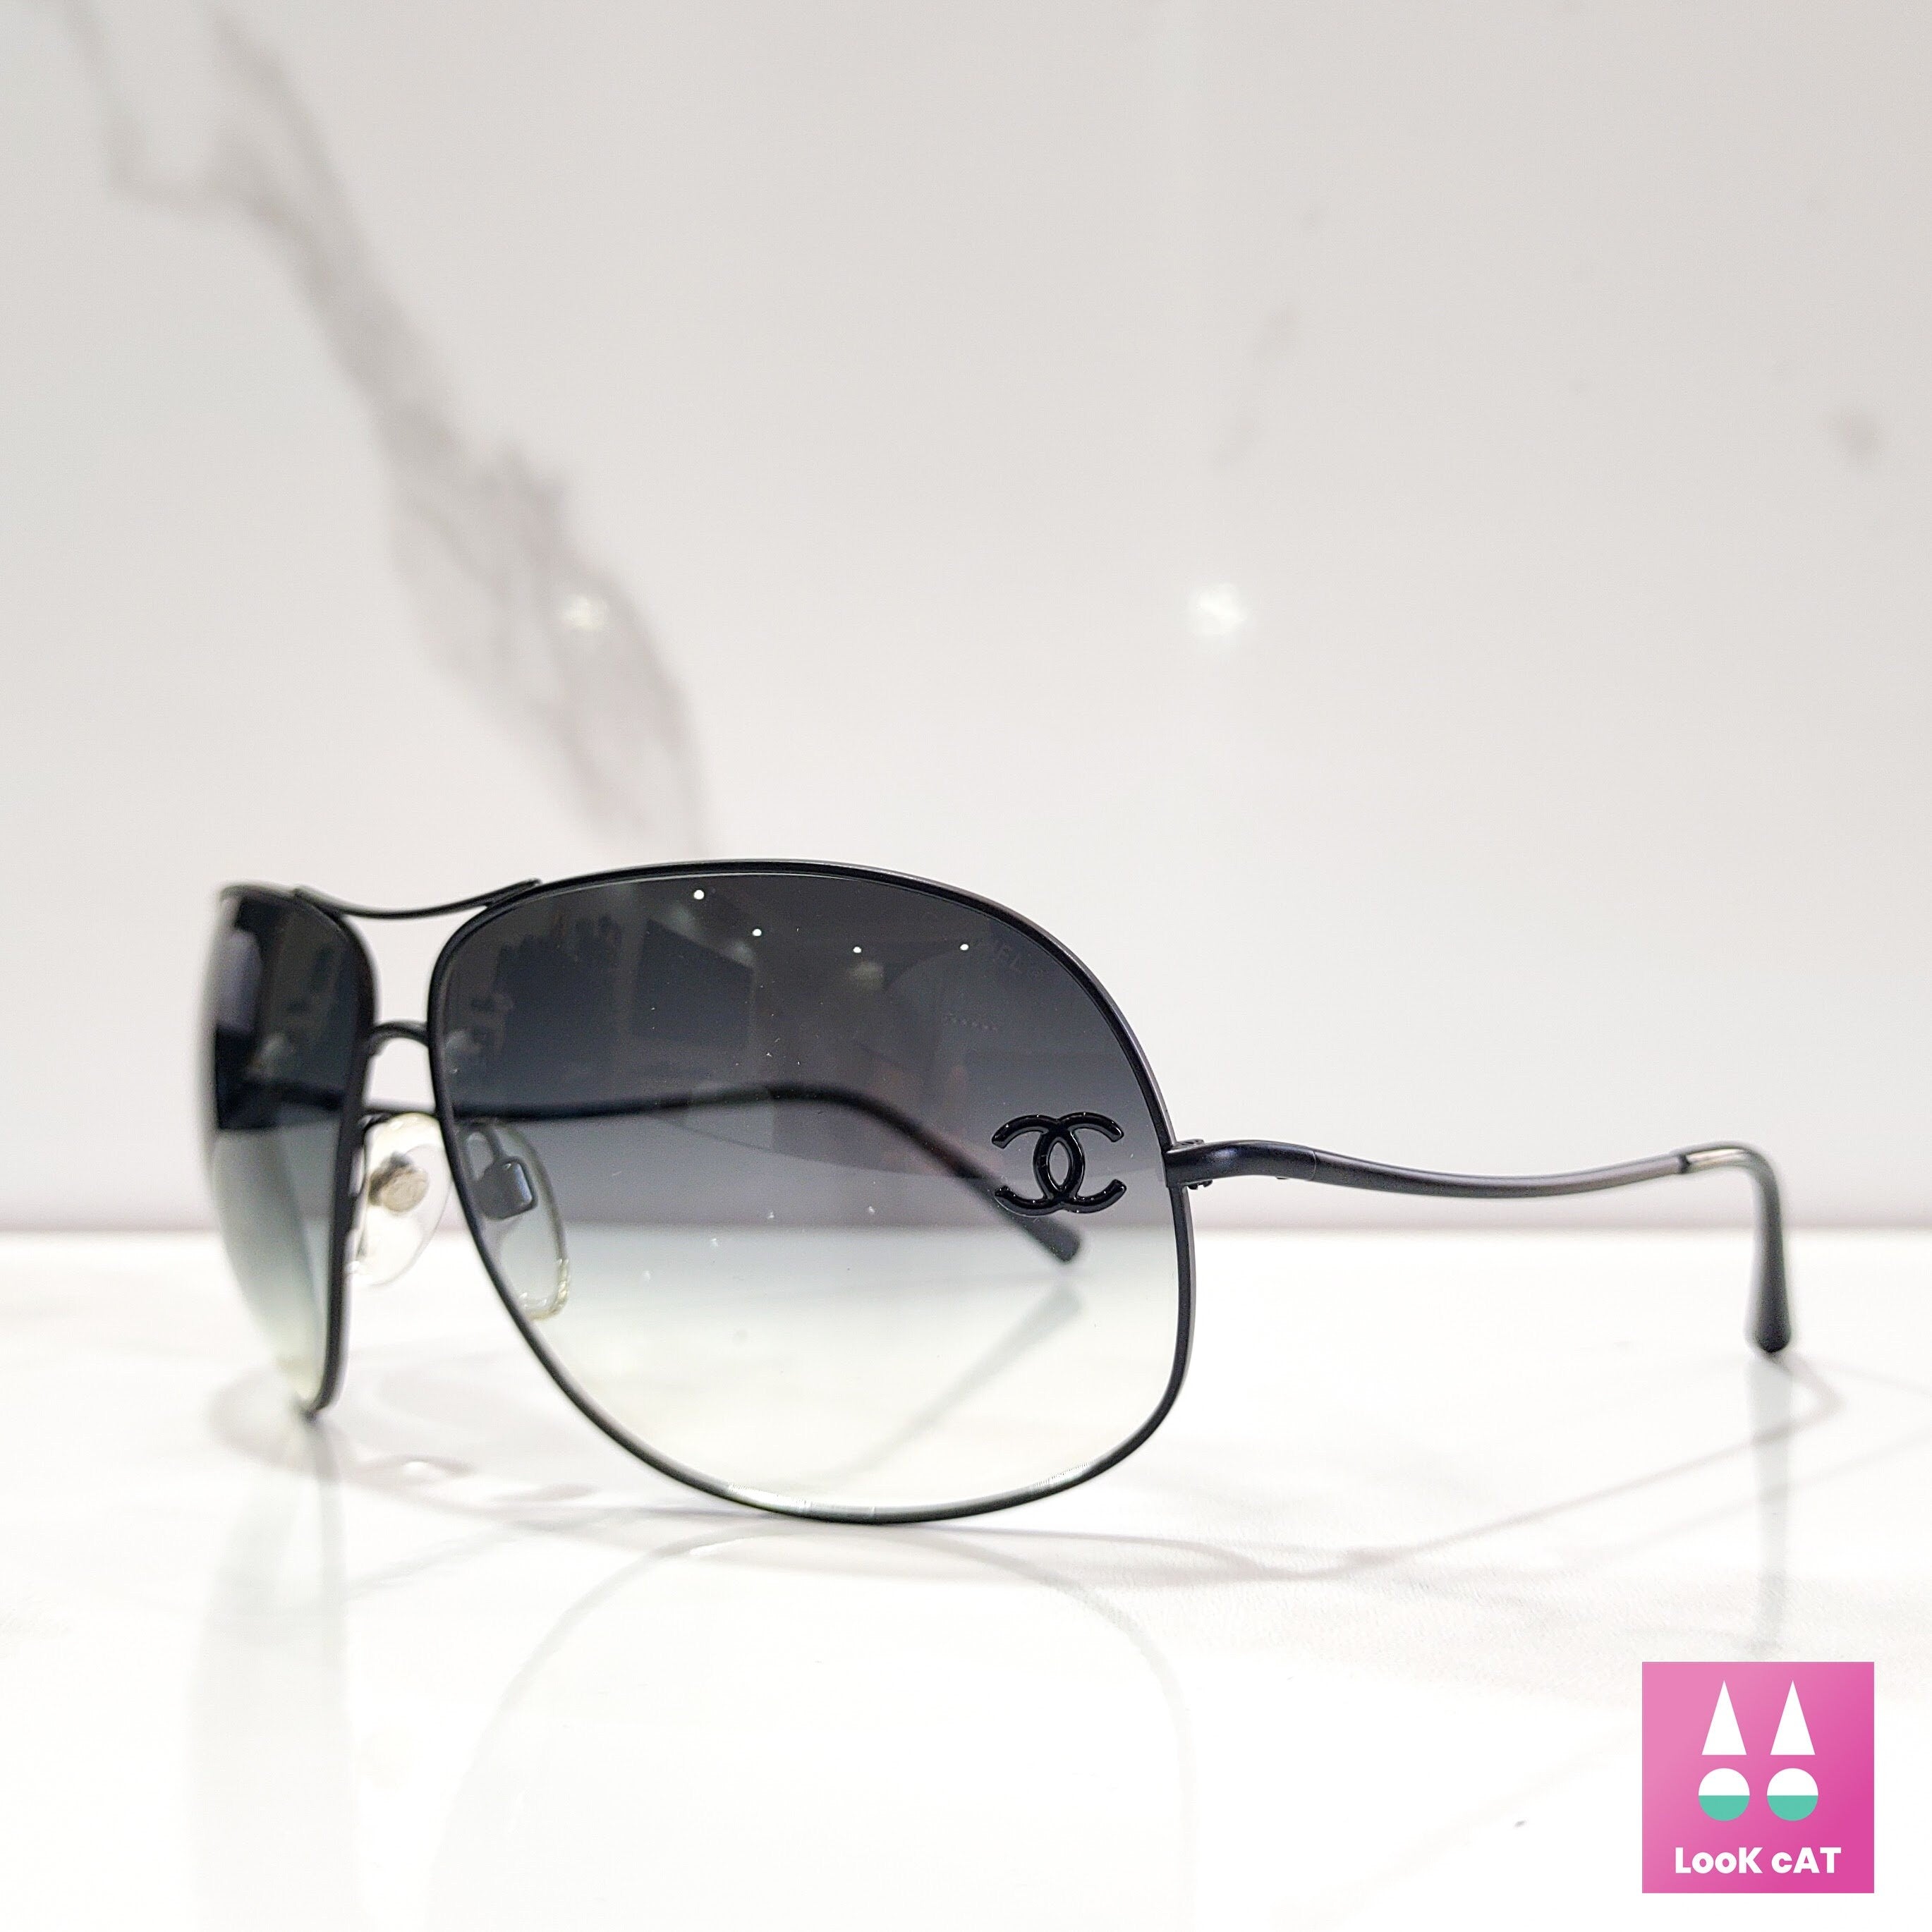 CHANEL Aviator sunglasses in c622s8 - black/ gray polarized